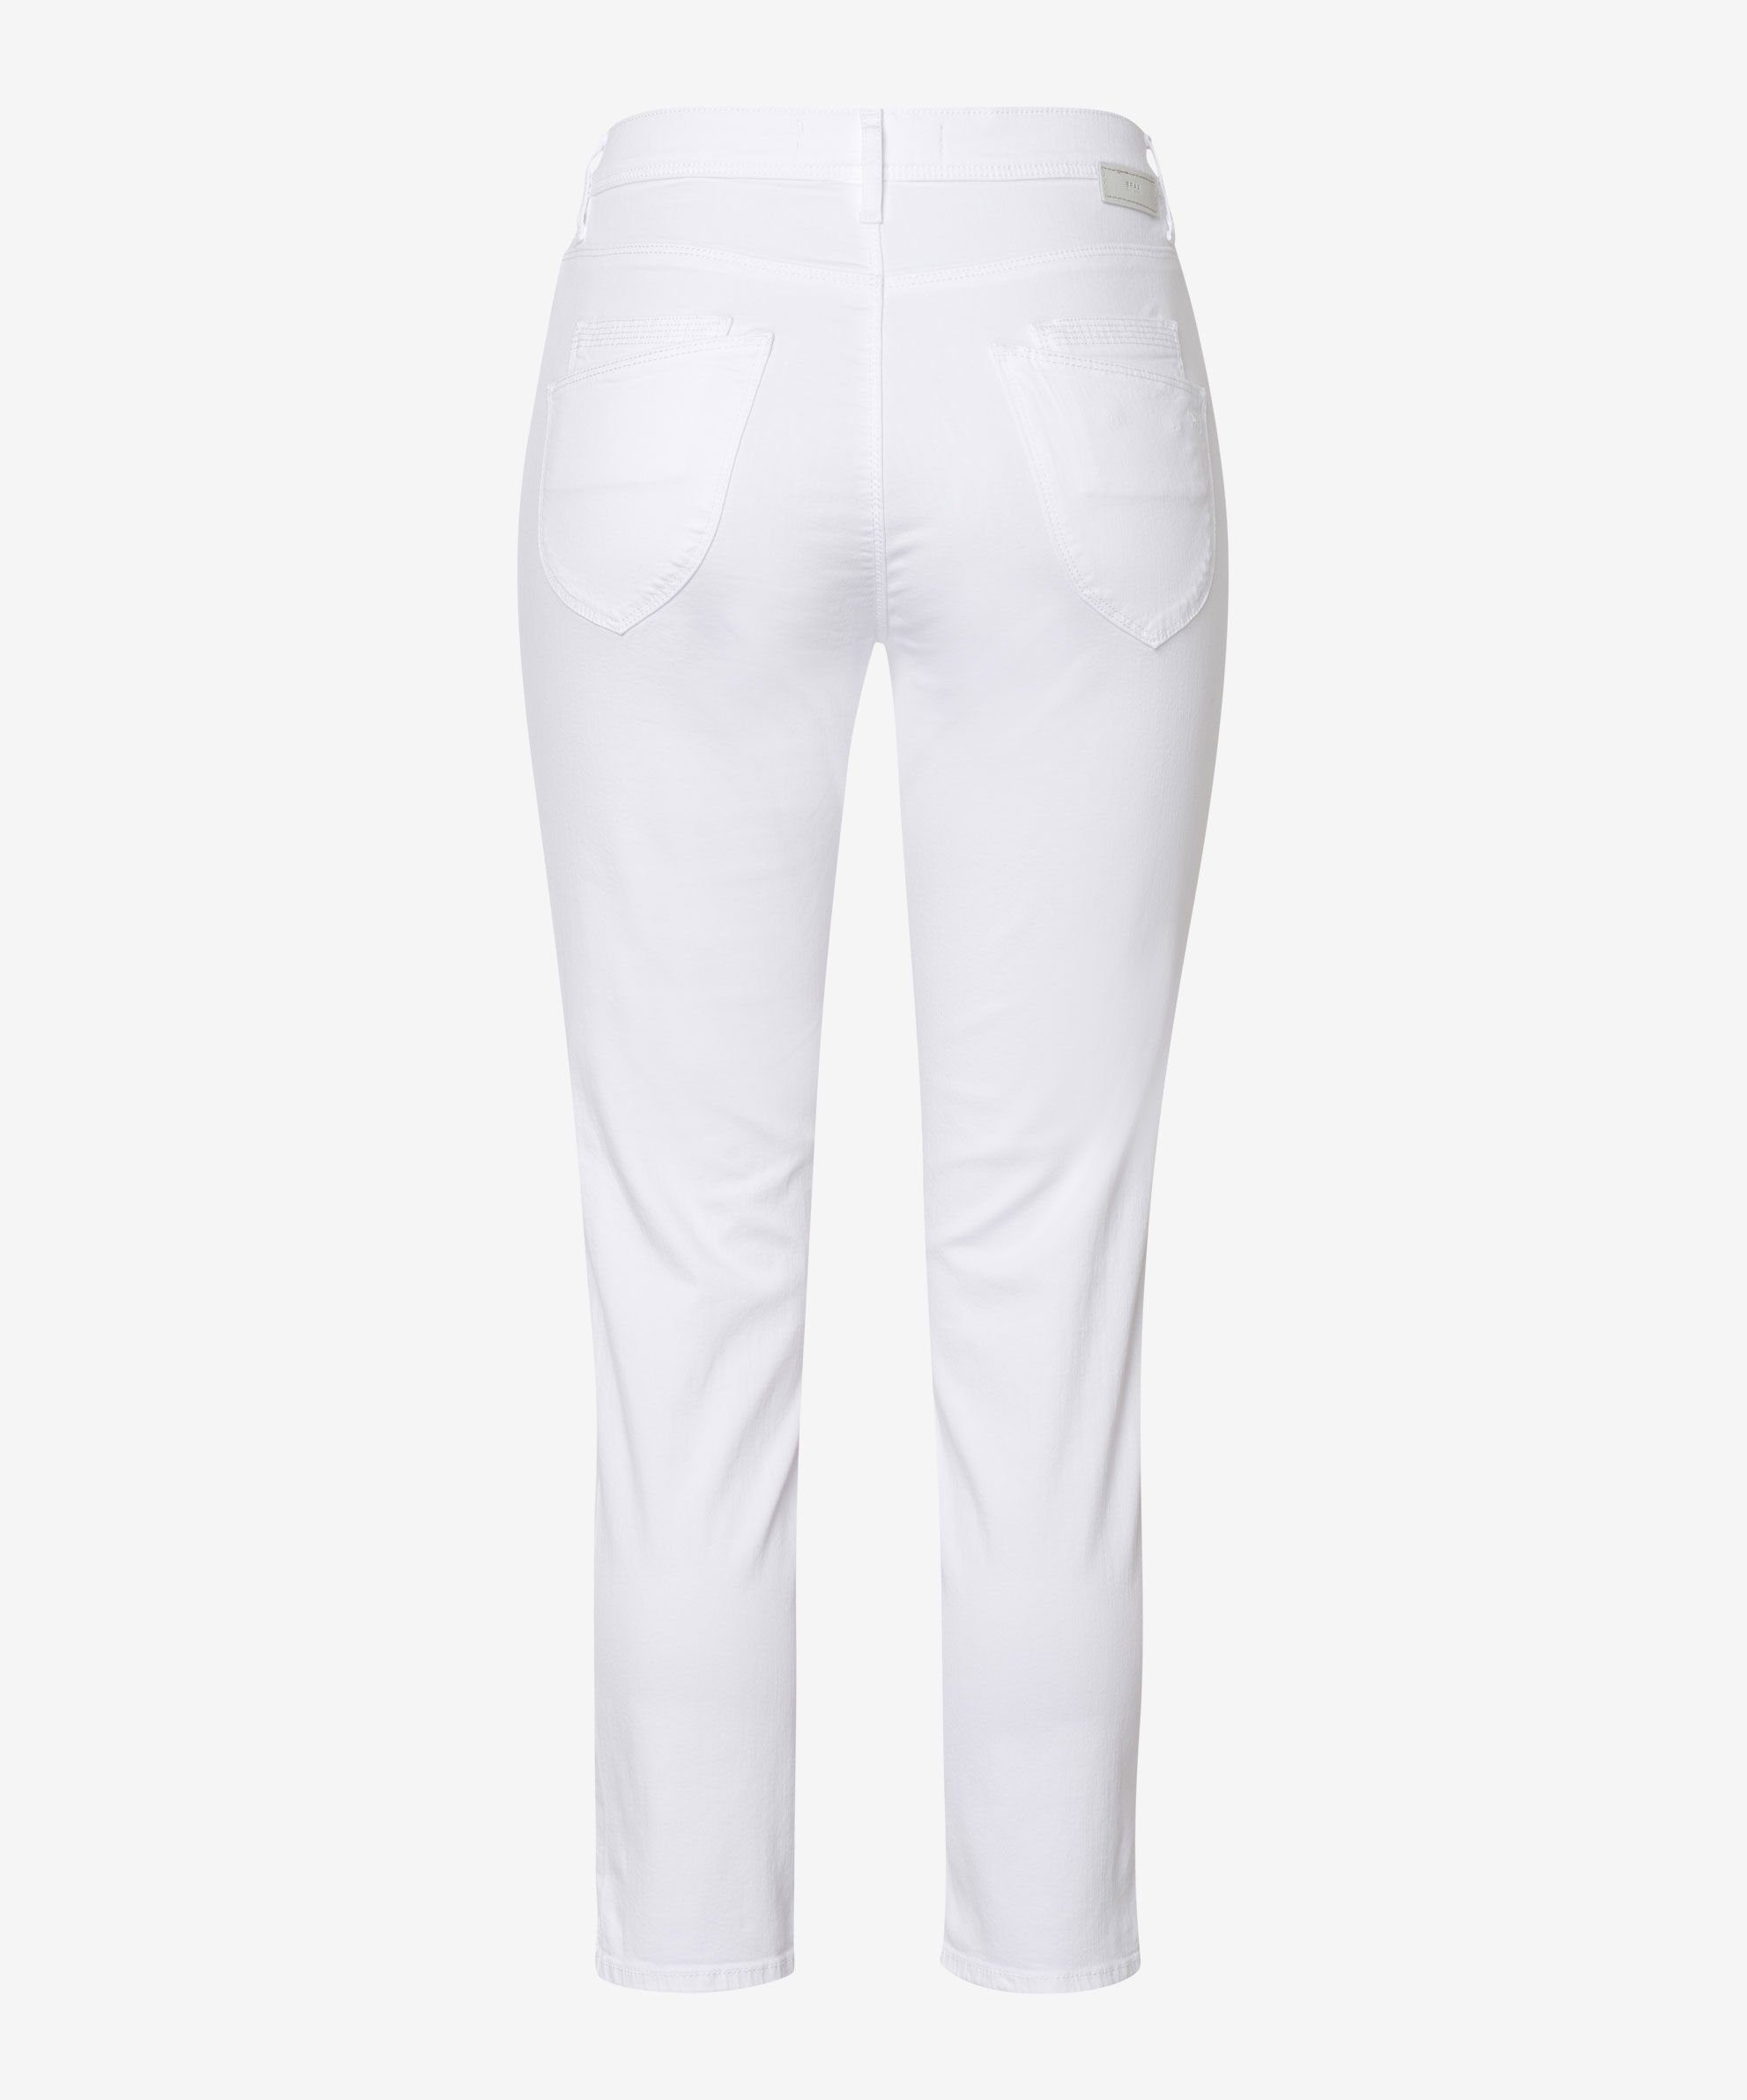 ULTRALIGHT Stretch-Jeans Brax S - 09921720 BRAX white MARY 74-7557.99